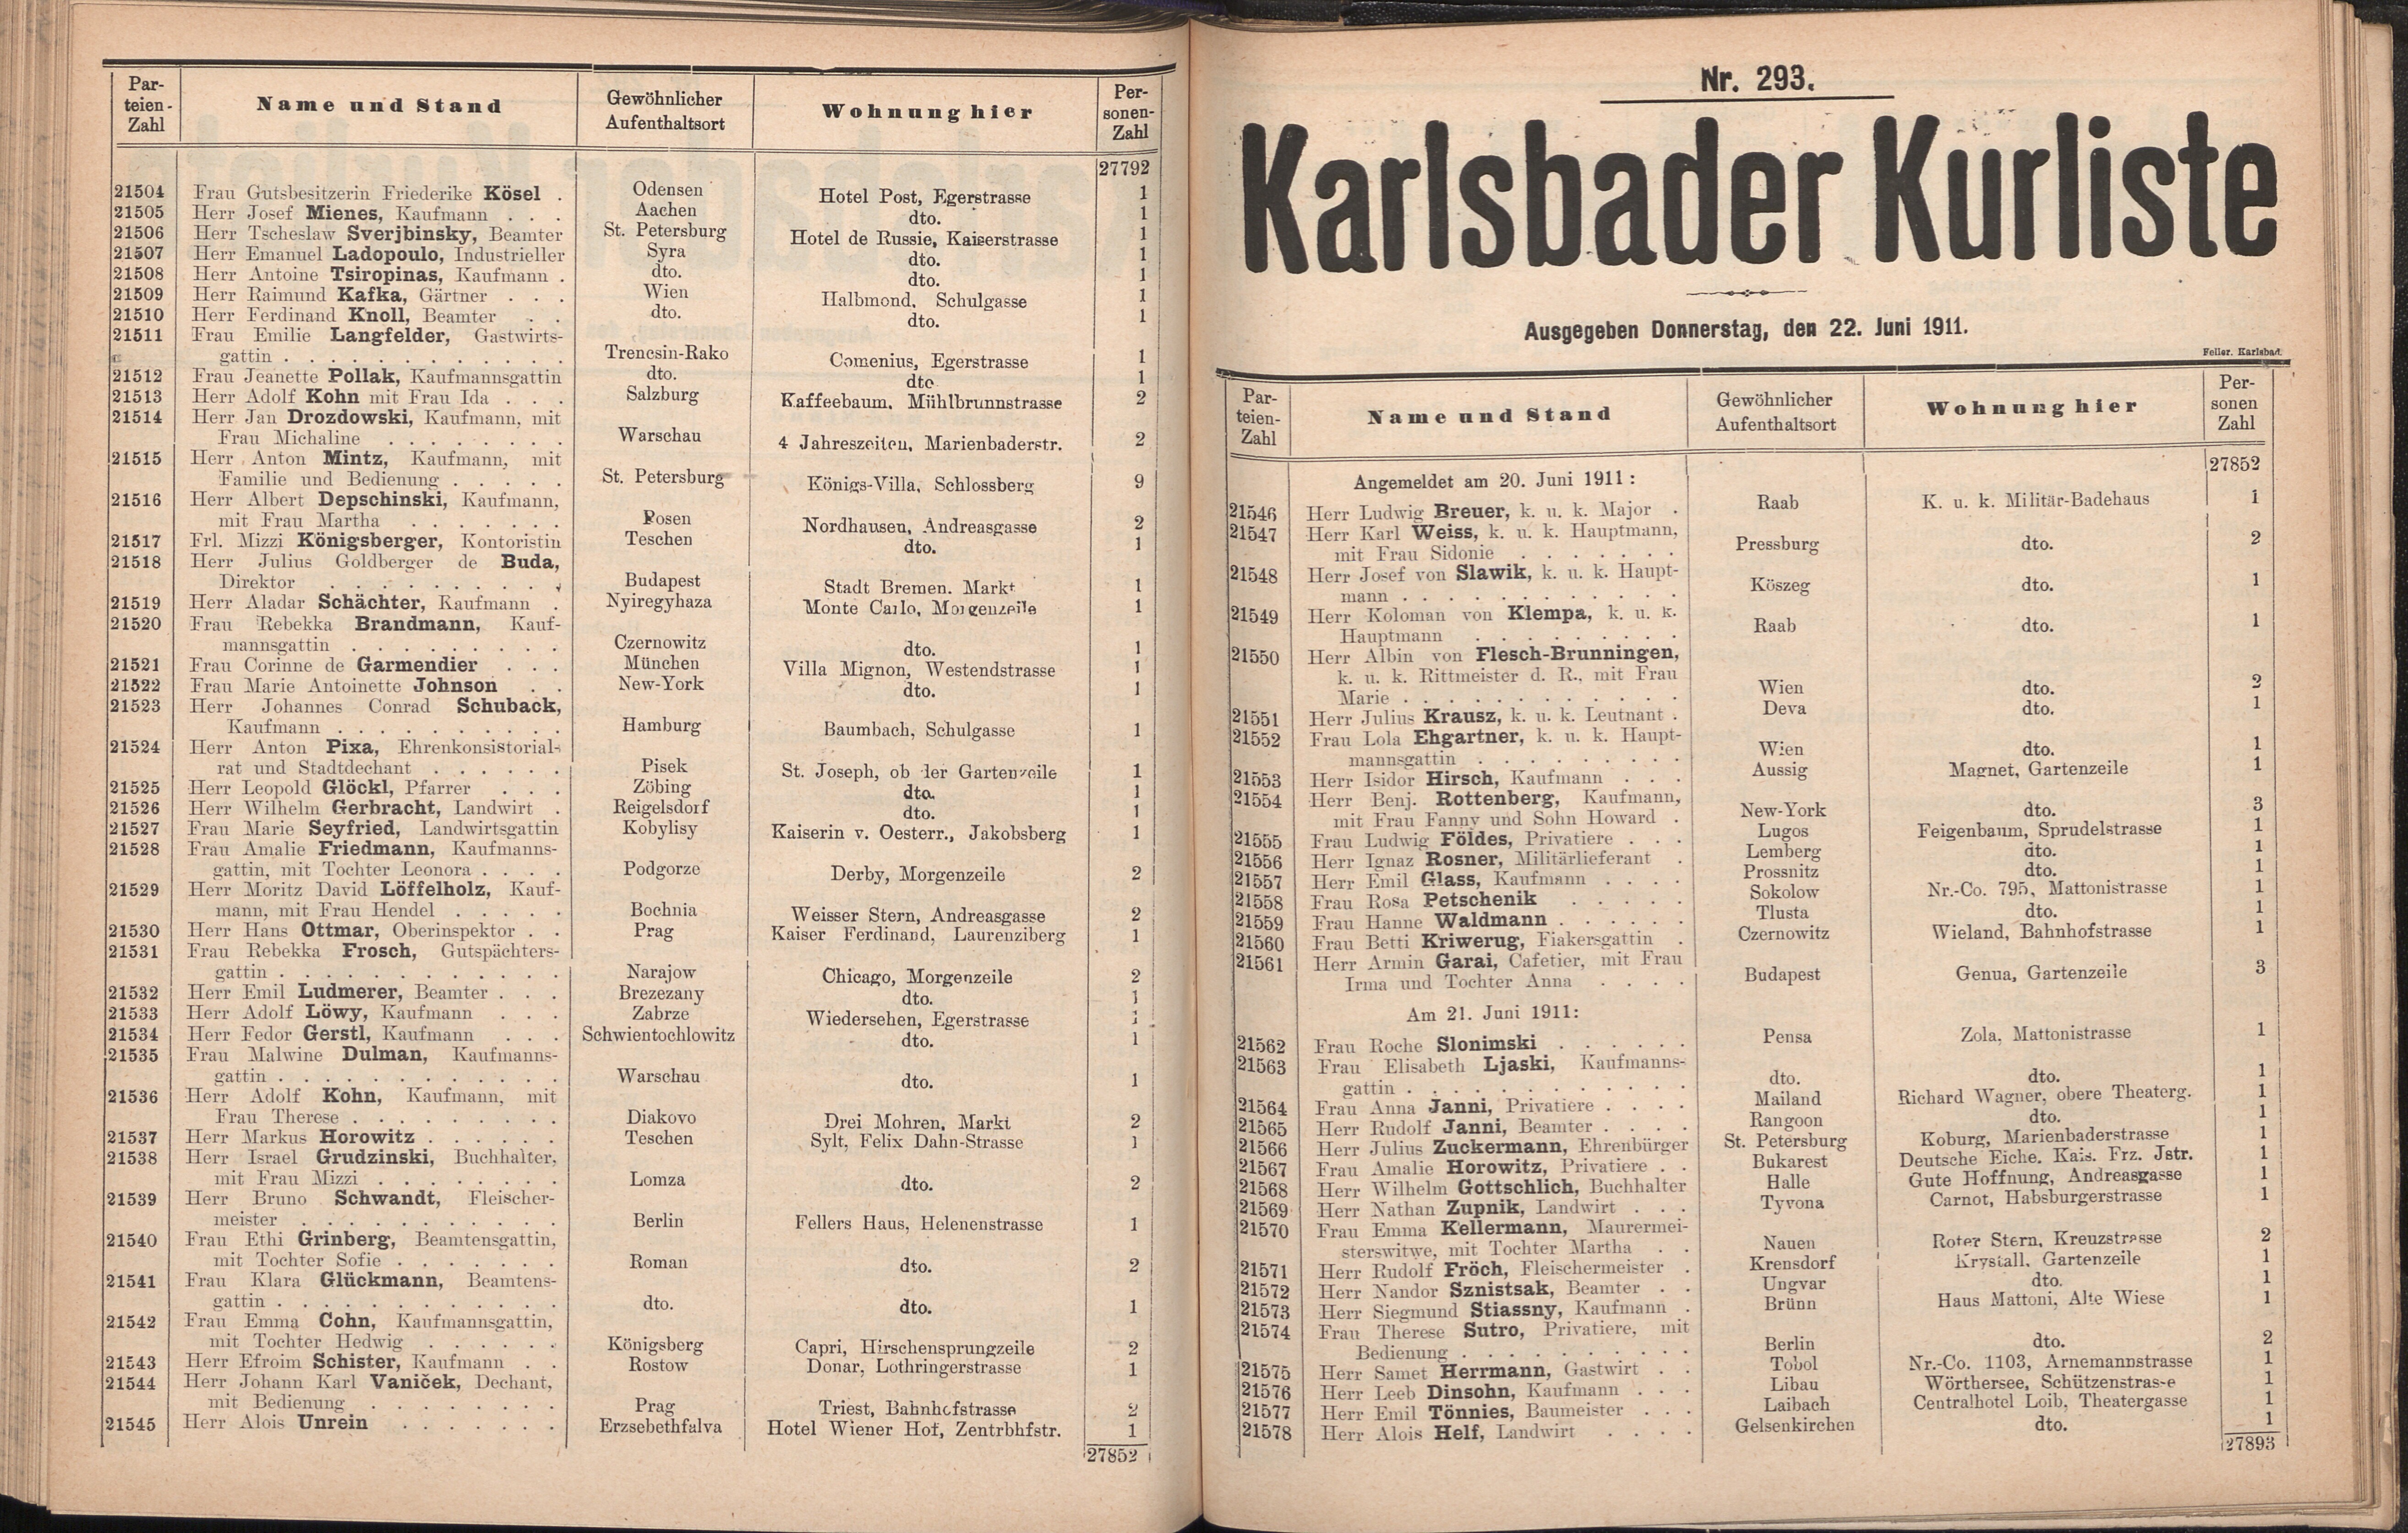 396. soap-kv_knihovna_karlsbader-kurliste-1911-1_3970